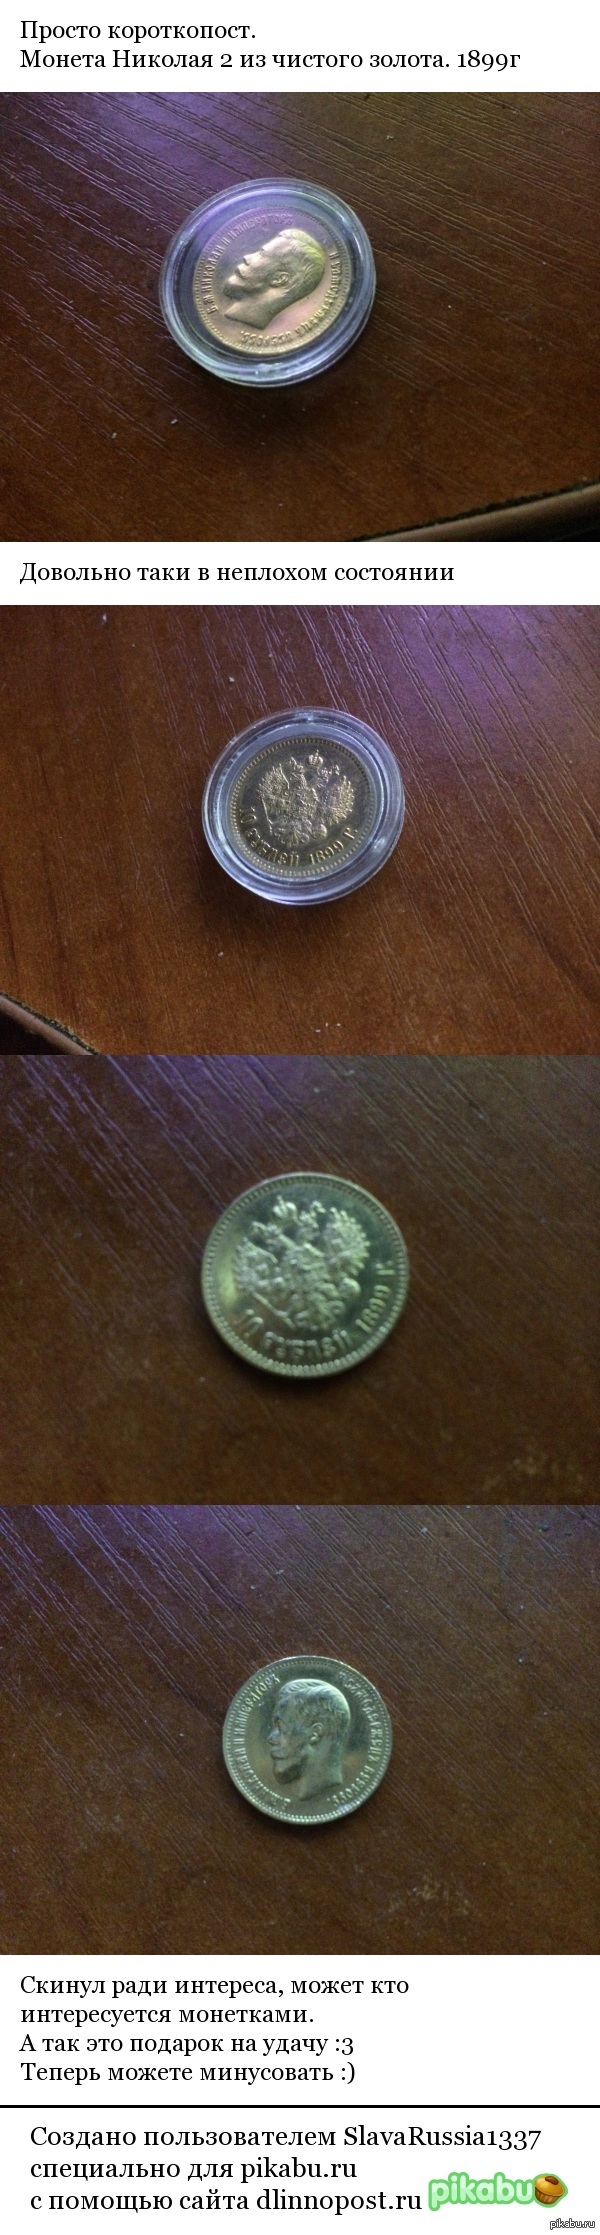 Coin of Nicholas II of pure gold 1899 - My, Coin, Nicholas II, Российская империя, Russia, Short post, Longpost